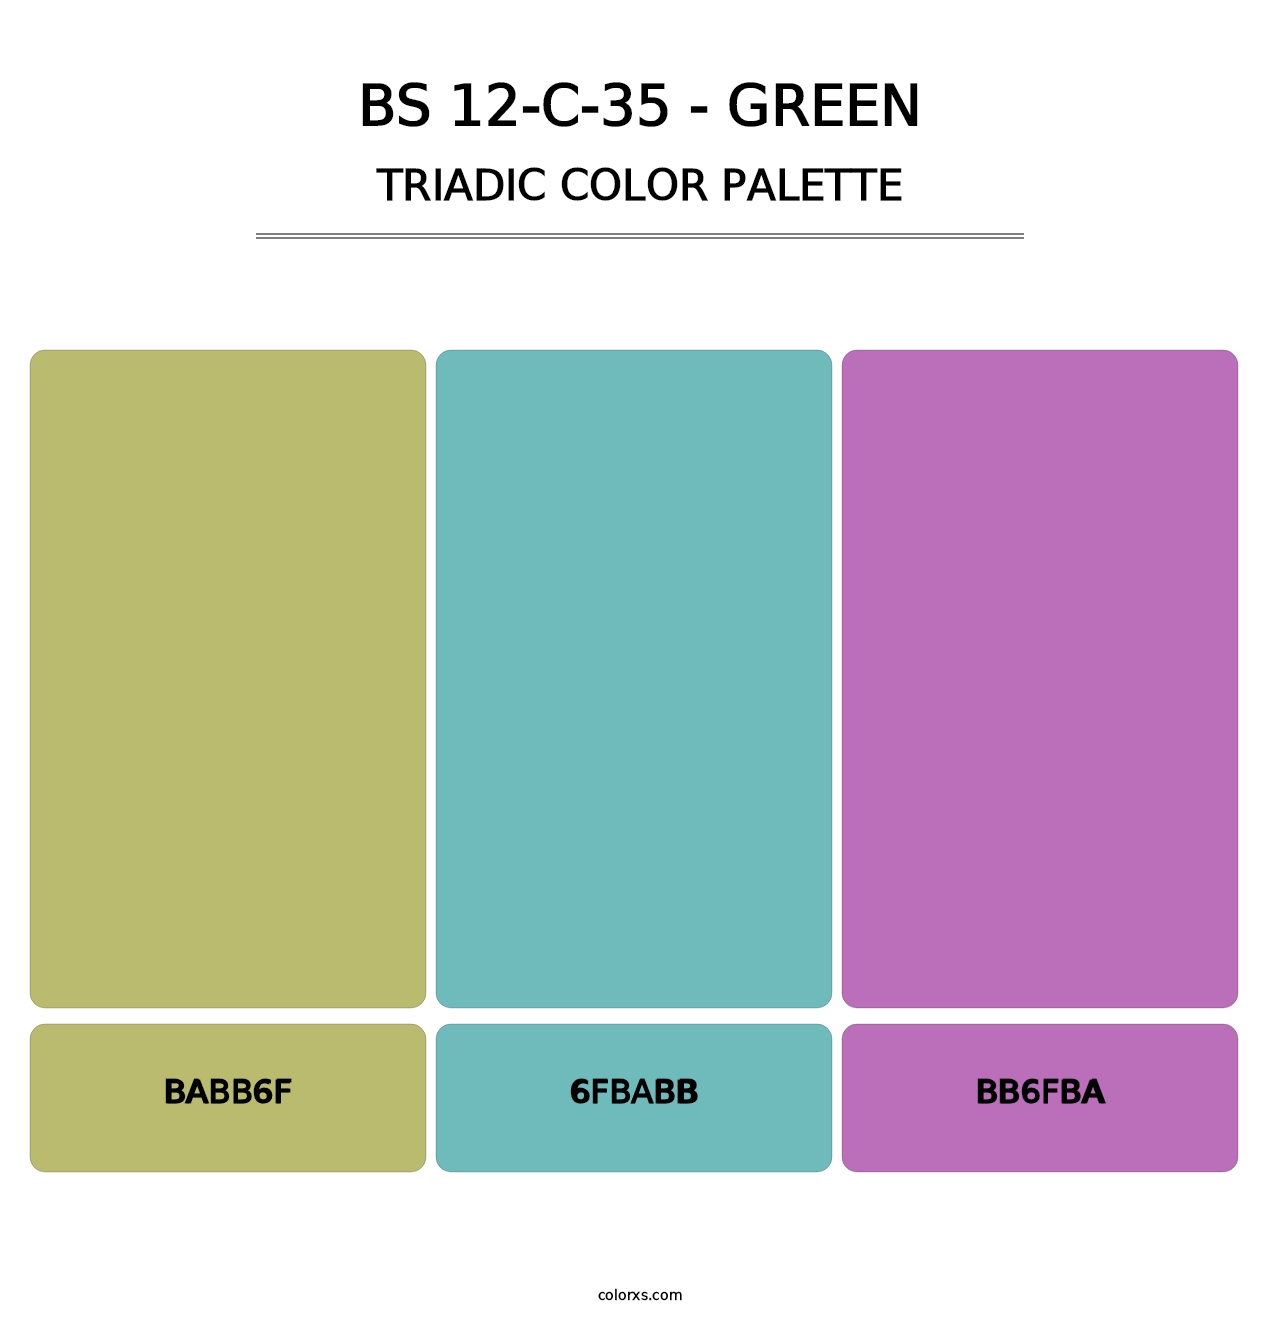 BS 12-C-35 - Green - Triadic Color Palette